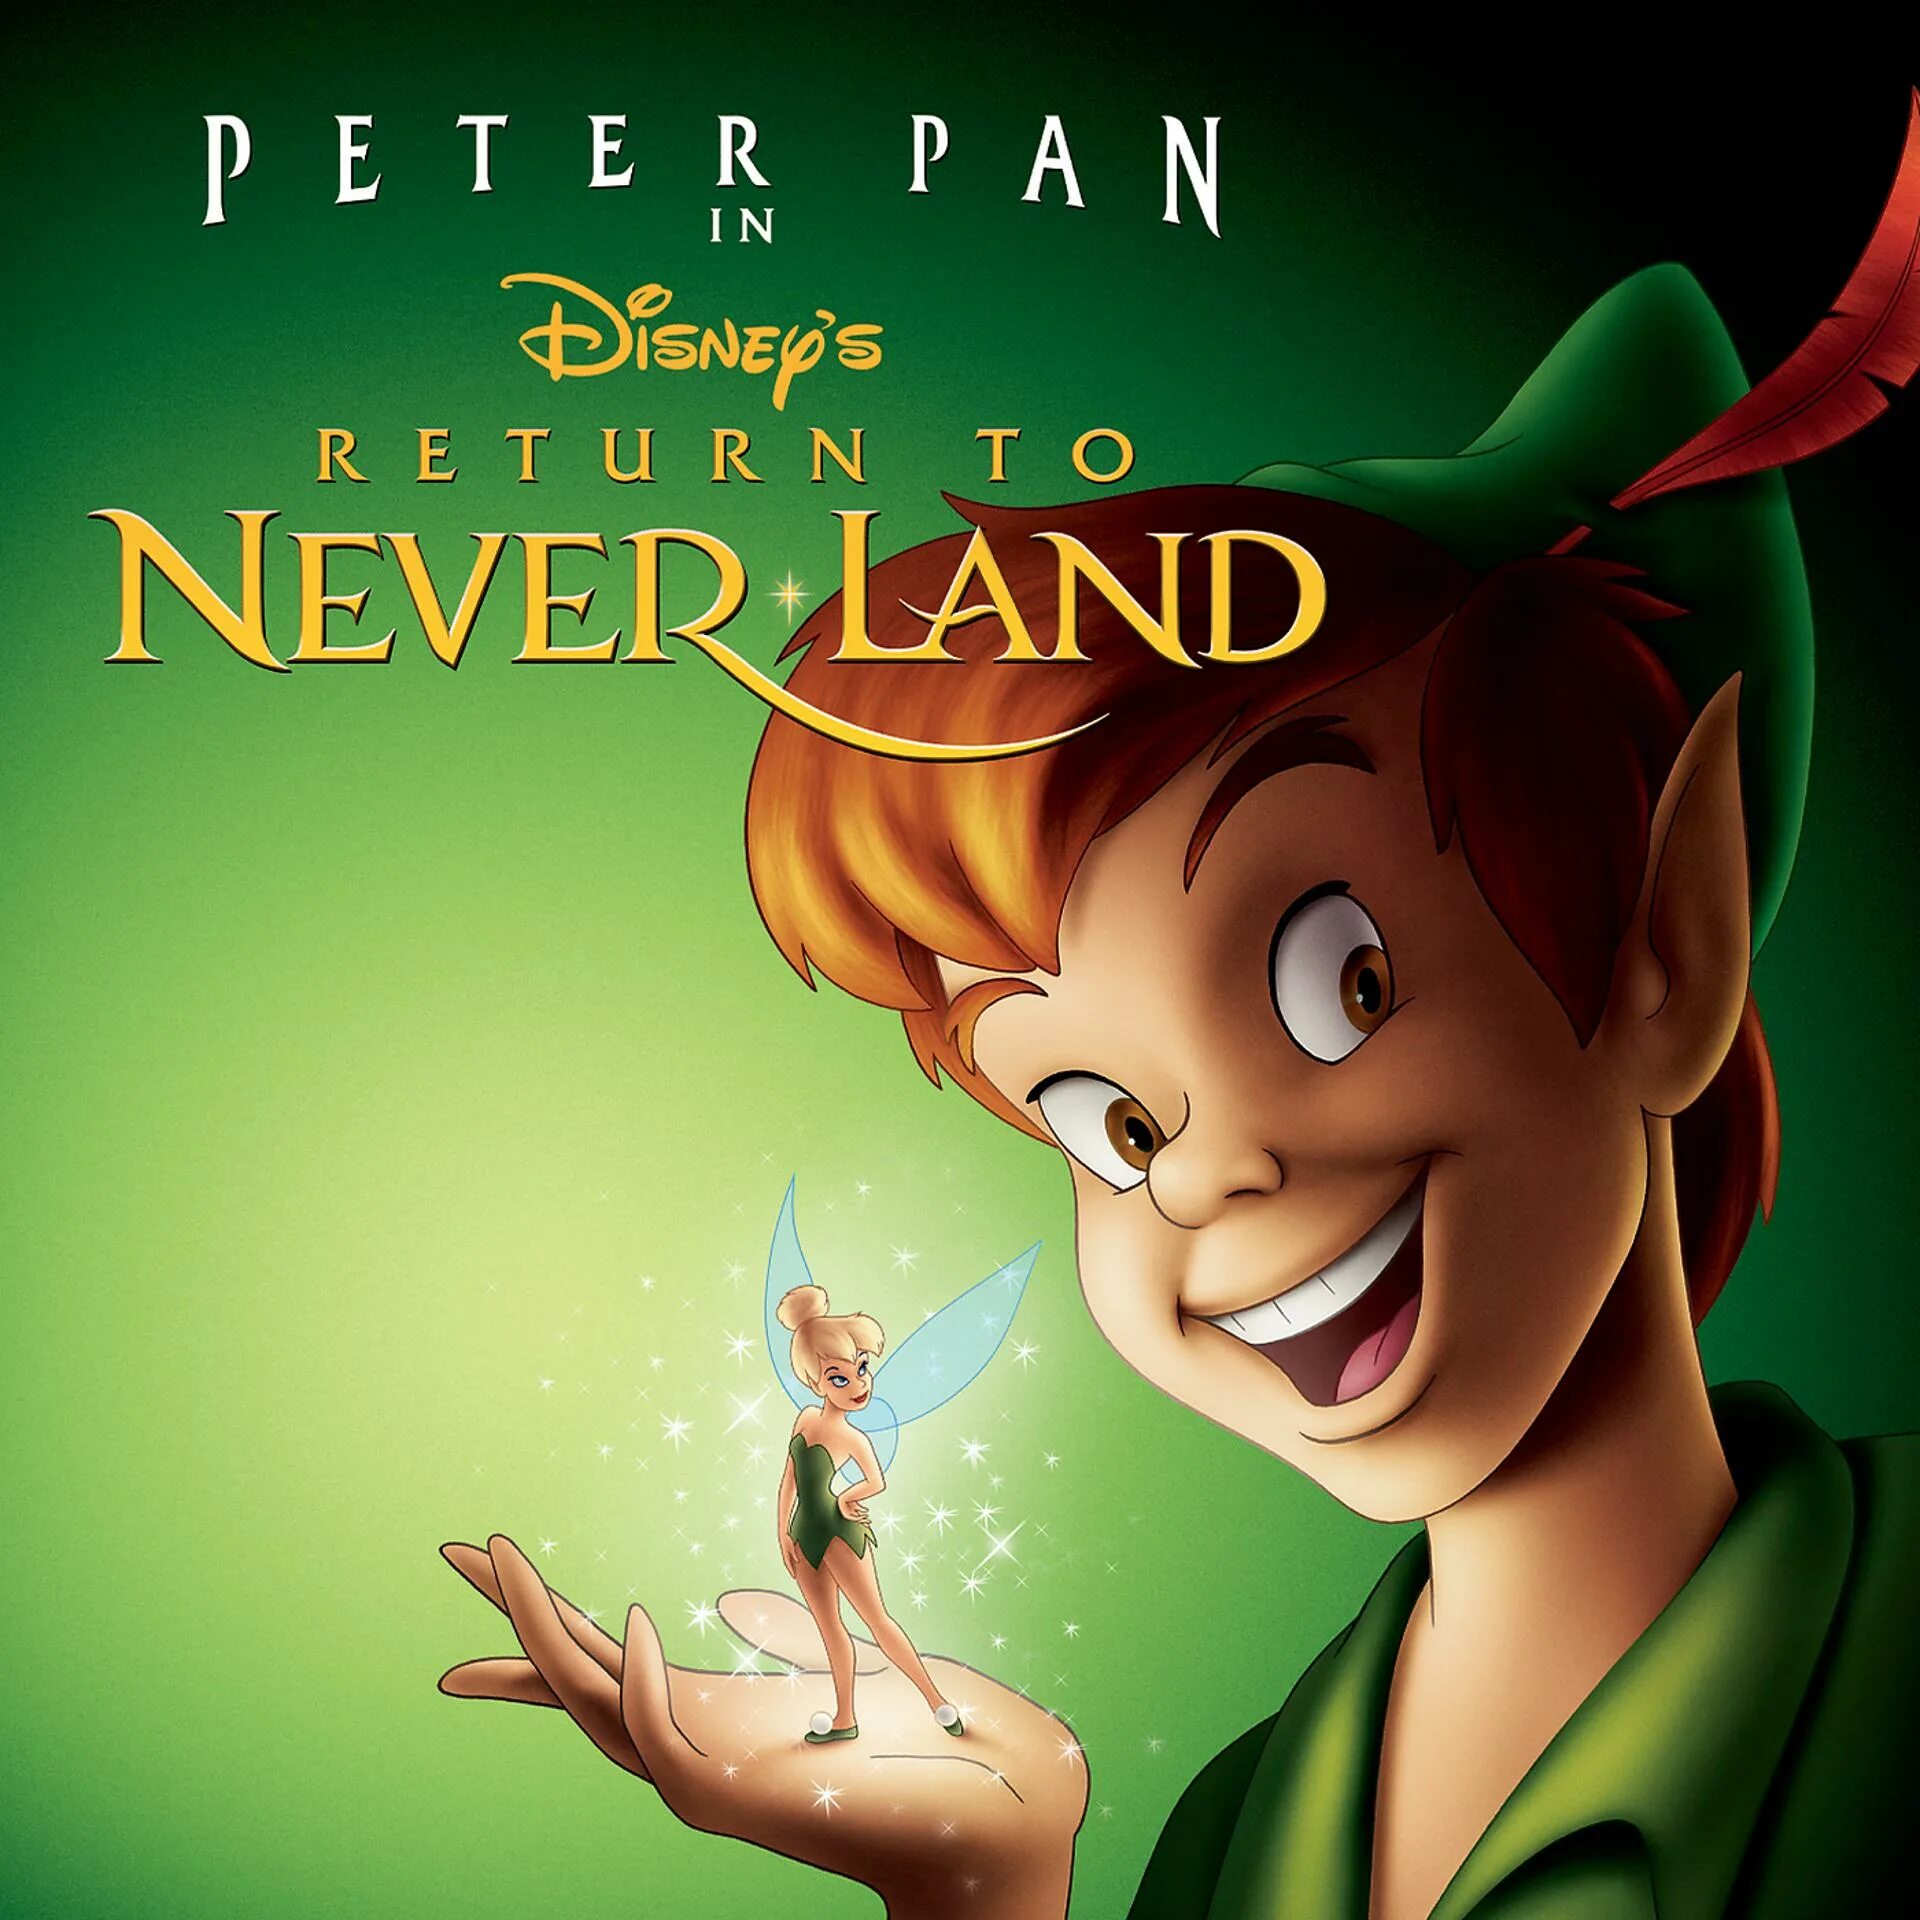 Питер Пэн 2. Питер Пэн Дисней. Disney's Peter Pan in Return to Neverland. Питер Пэн 2 Возвращение в Нетландию.